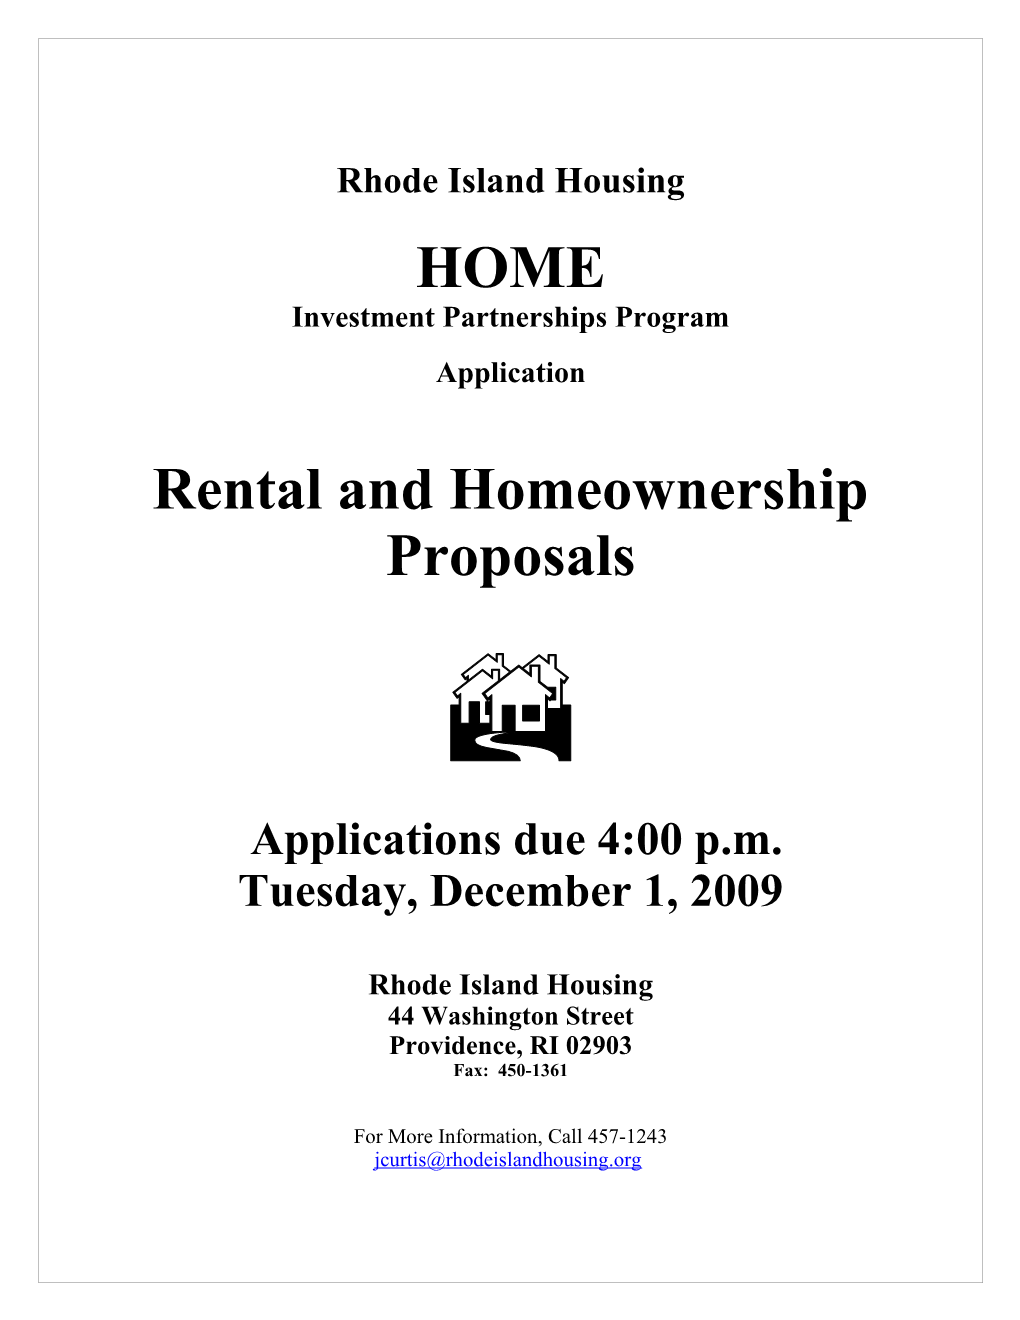 Rhode Island Housing Home Program